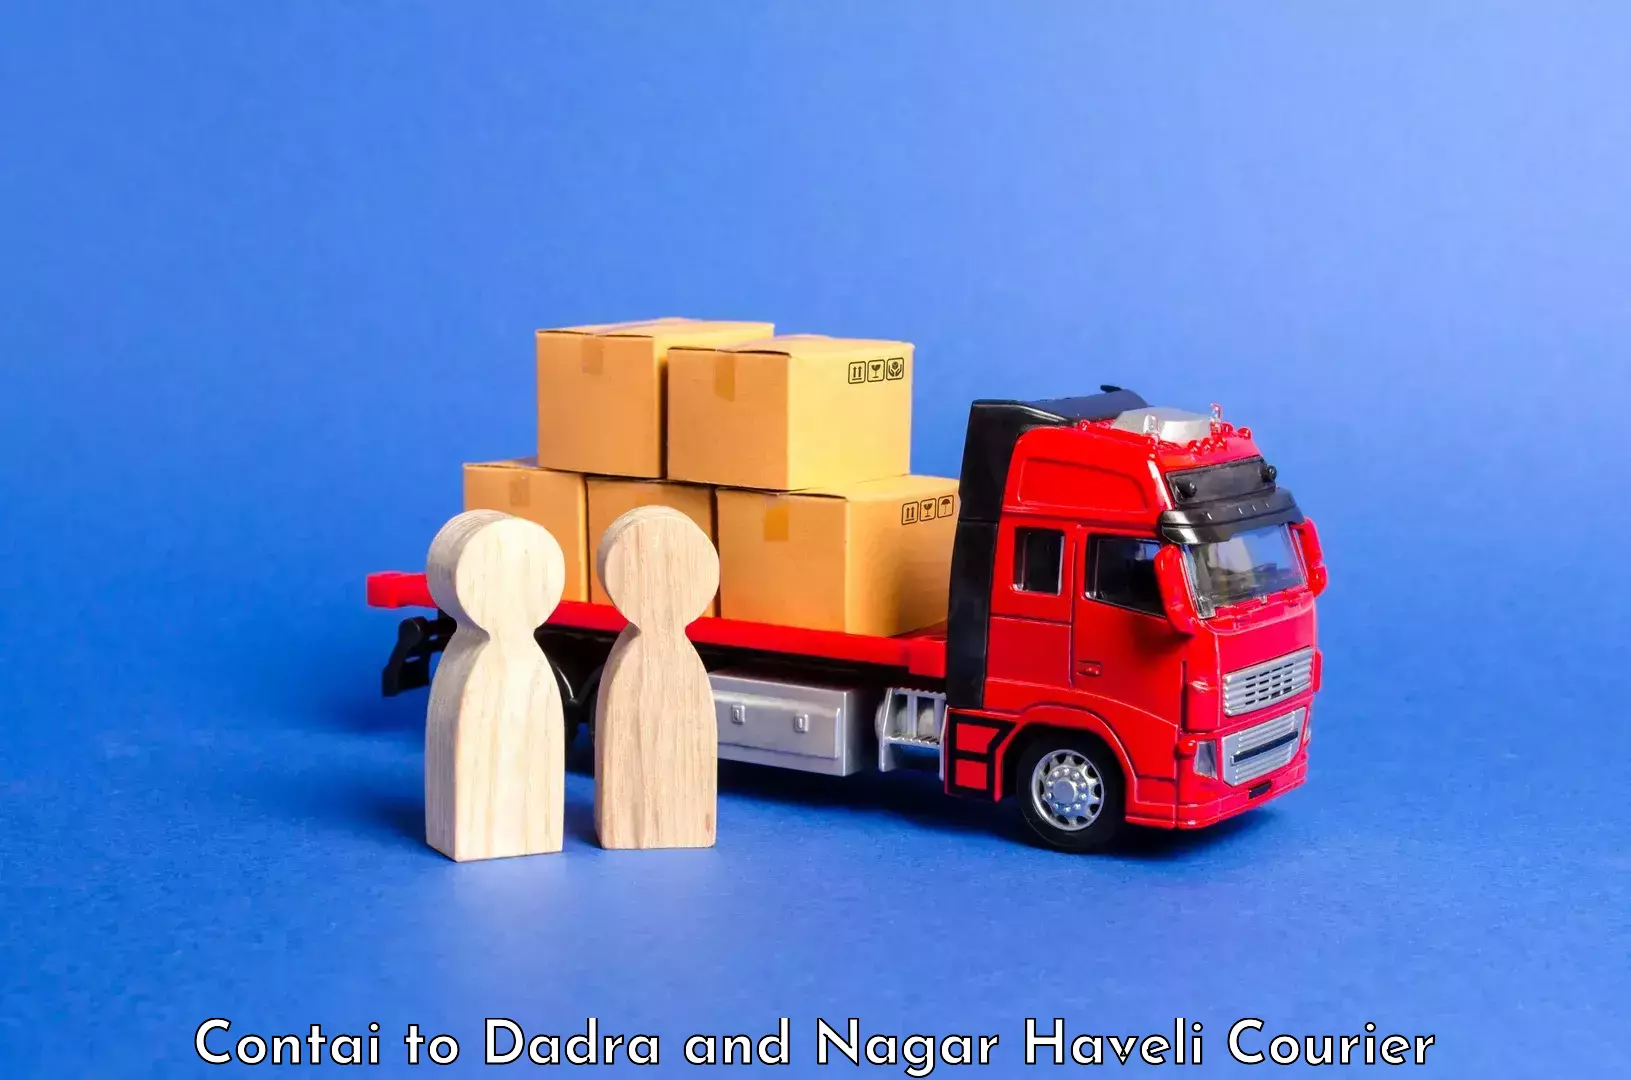 Luggage transport service Contai to Dadra and Nagar Haveli